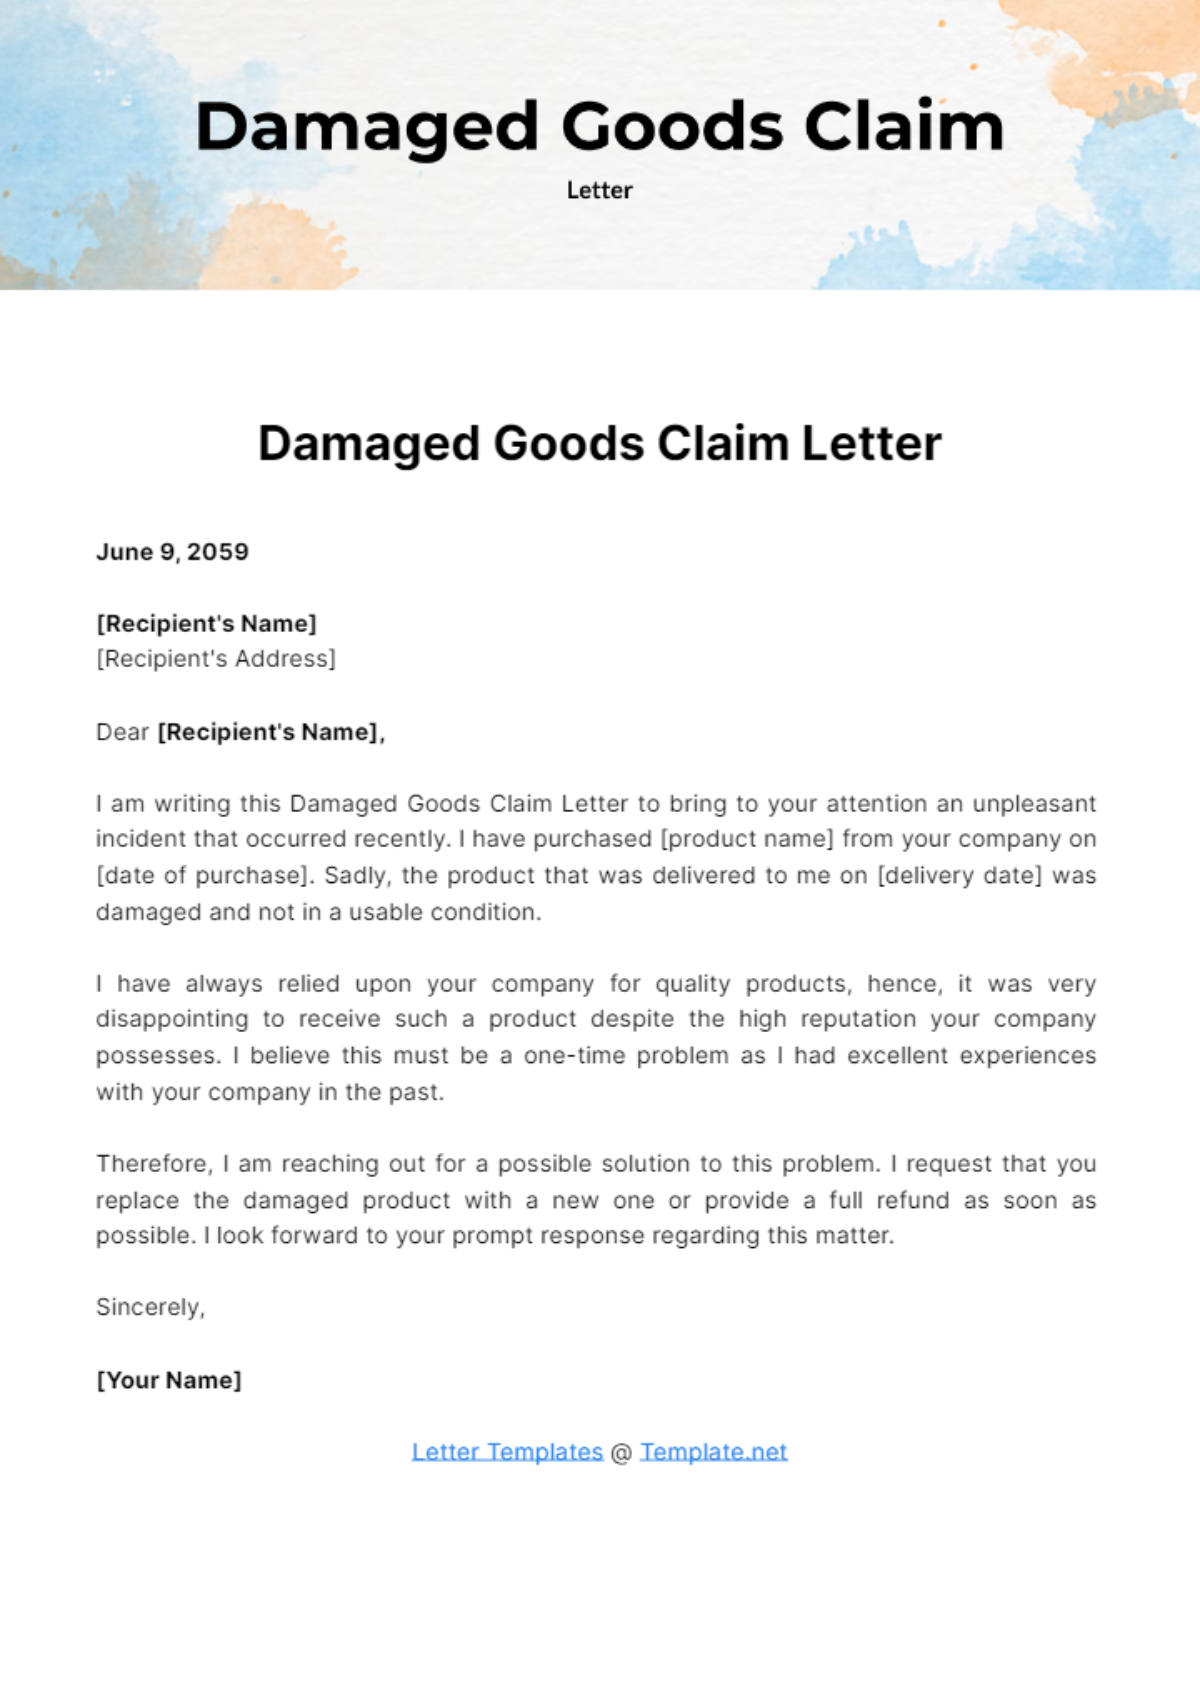 Damaged Goods Claim Letter Template